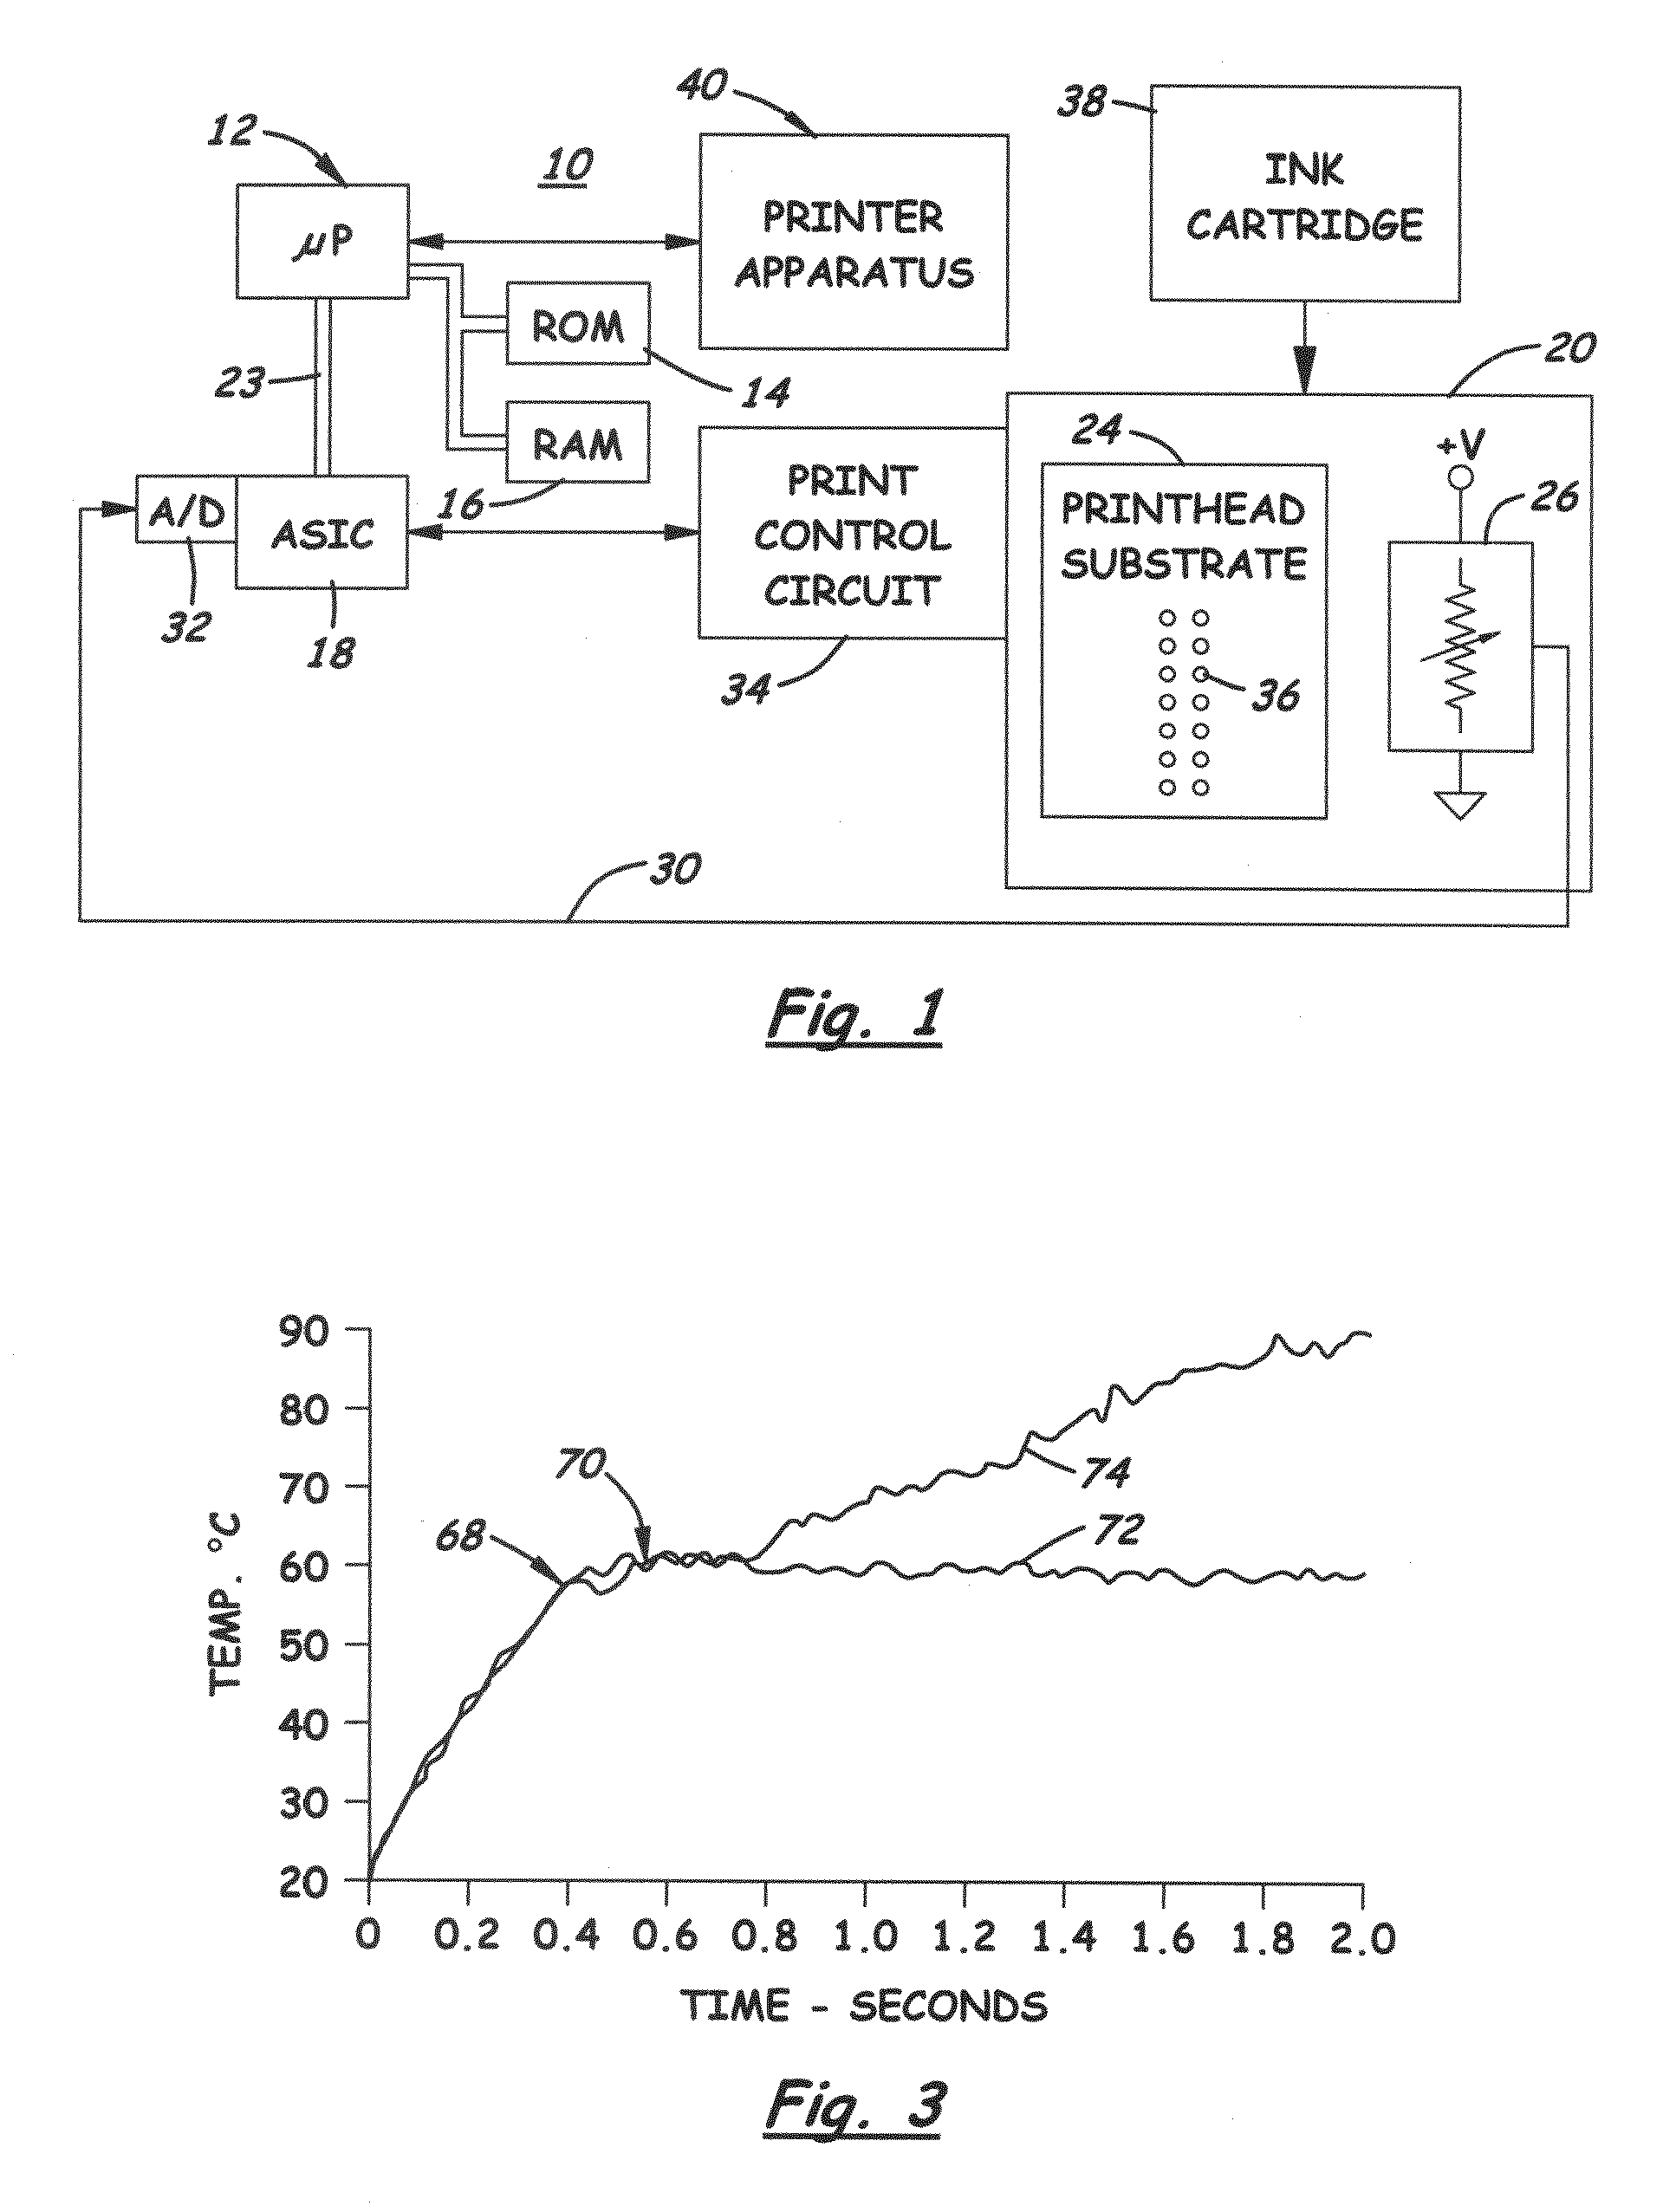 Method for measuring ink flow rate in an inkjet printhead